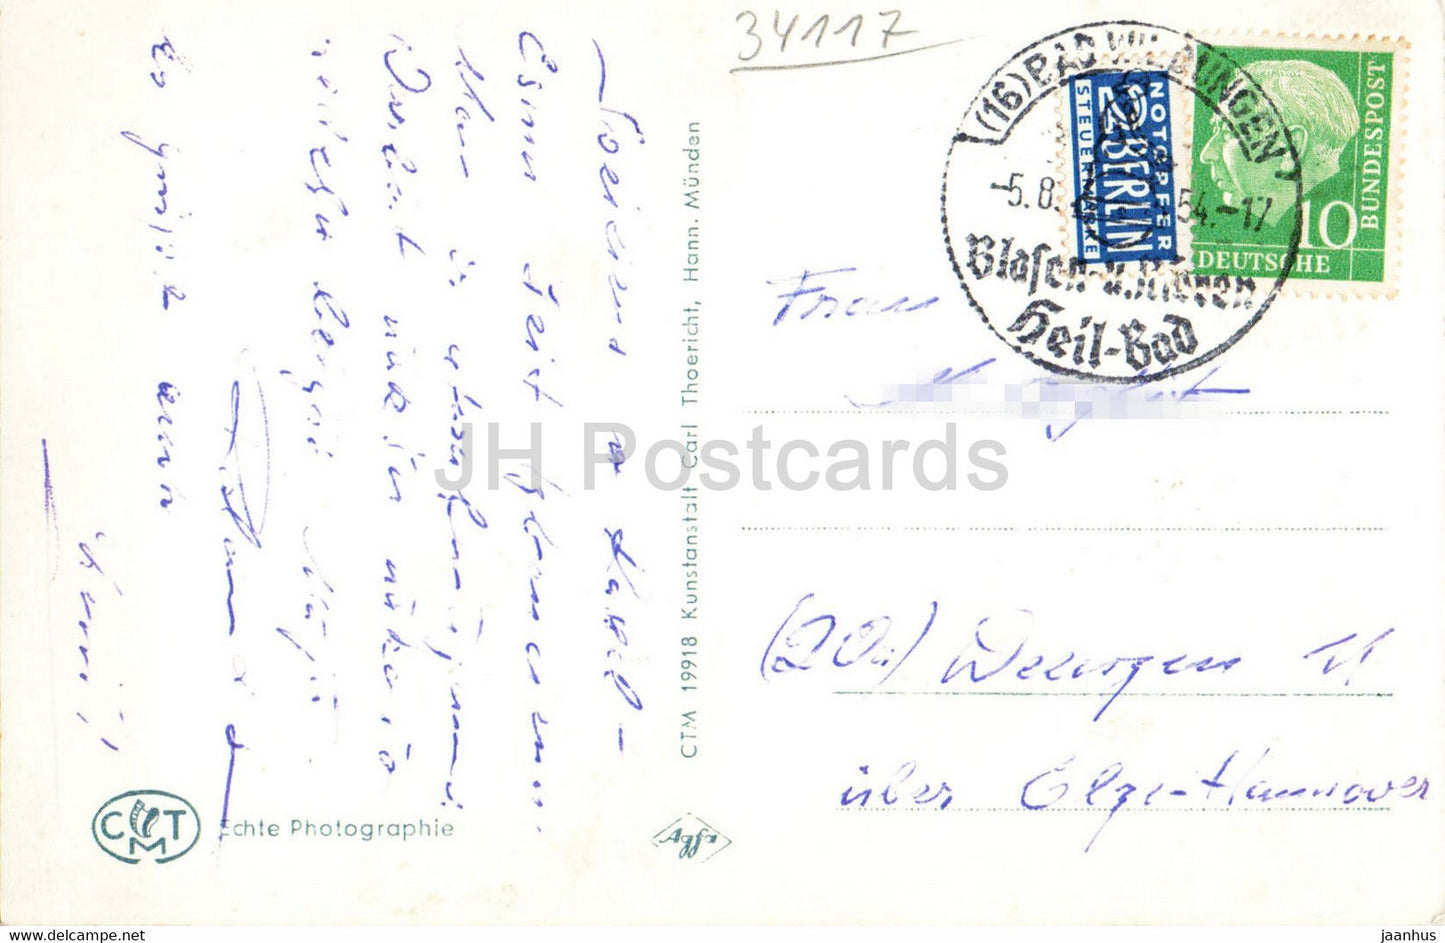 Gruss aus Kassel Wilhelmshohe - Lowenburg - Schloss - carte postale ancienne - 1954 - Allemagne - utilisé